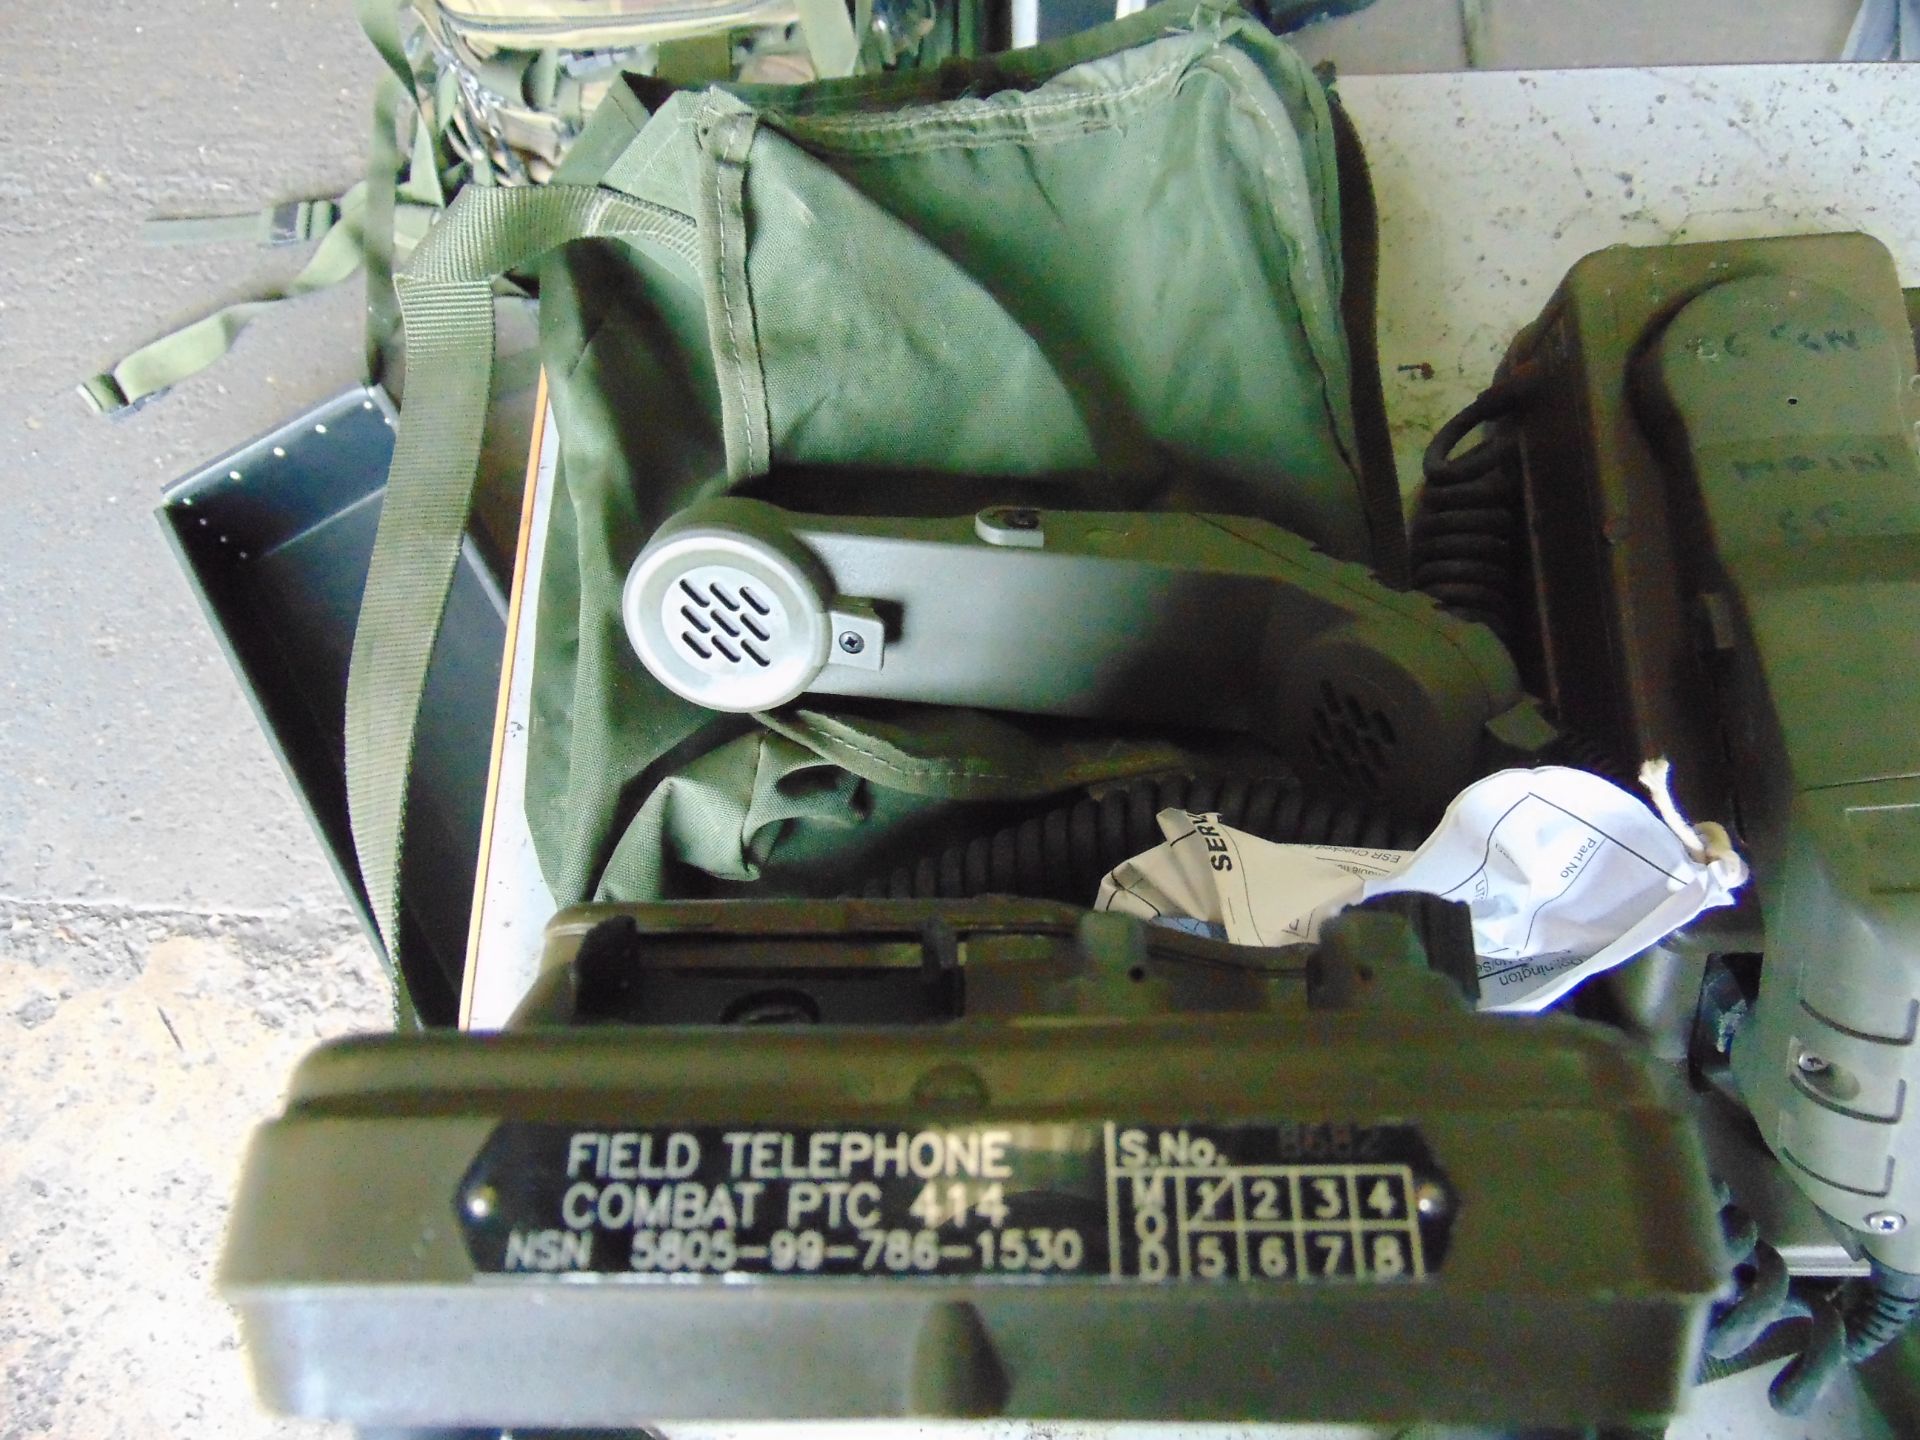 2 x Field Telephone Combat PTC 414 in bags - Image 2 of 3